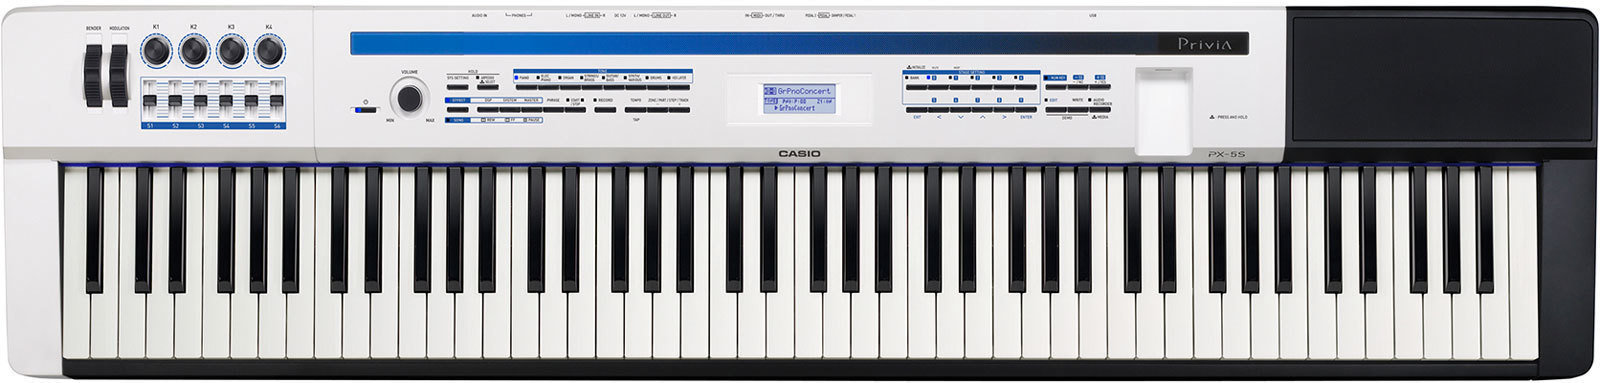 Casio PX-5S Privia Digitální stage piano Casio